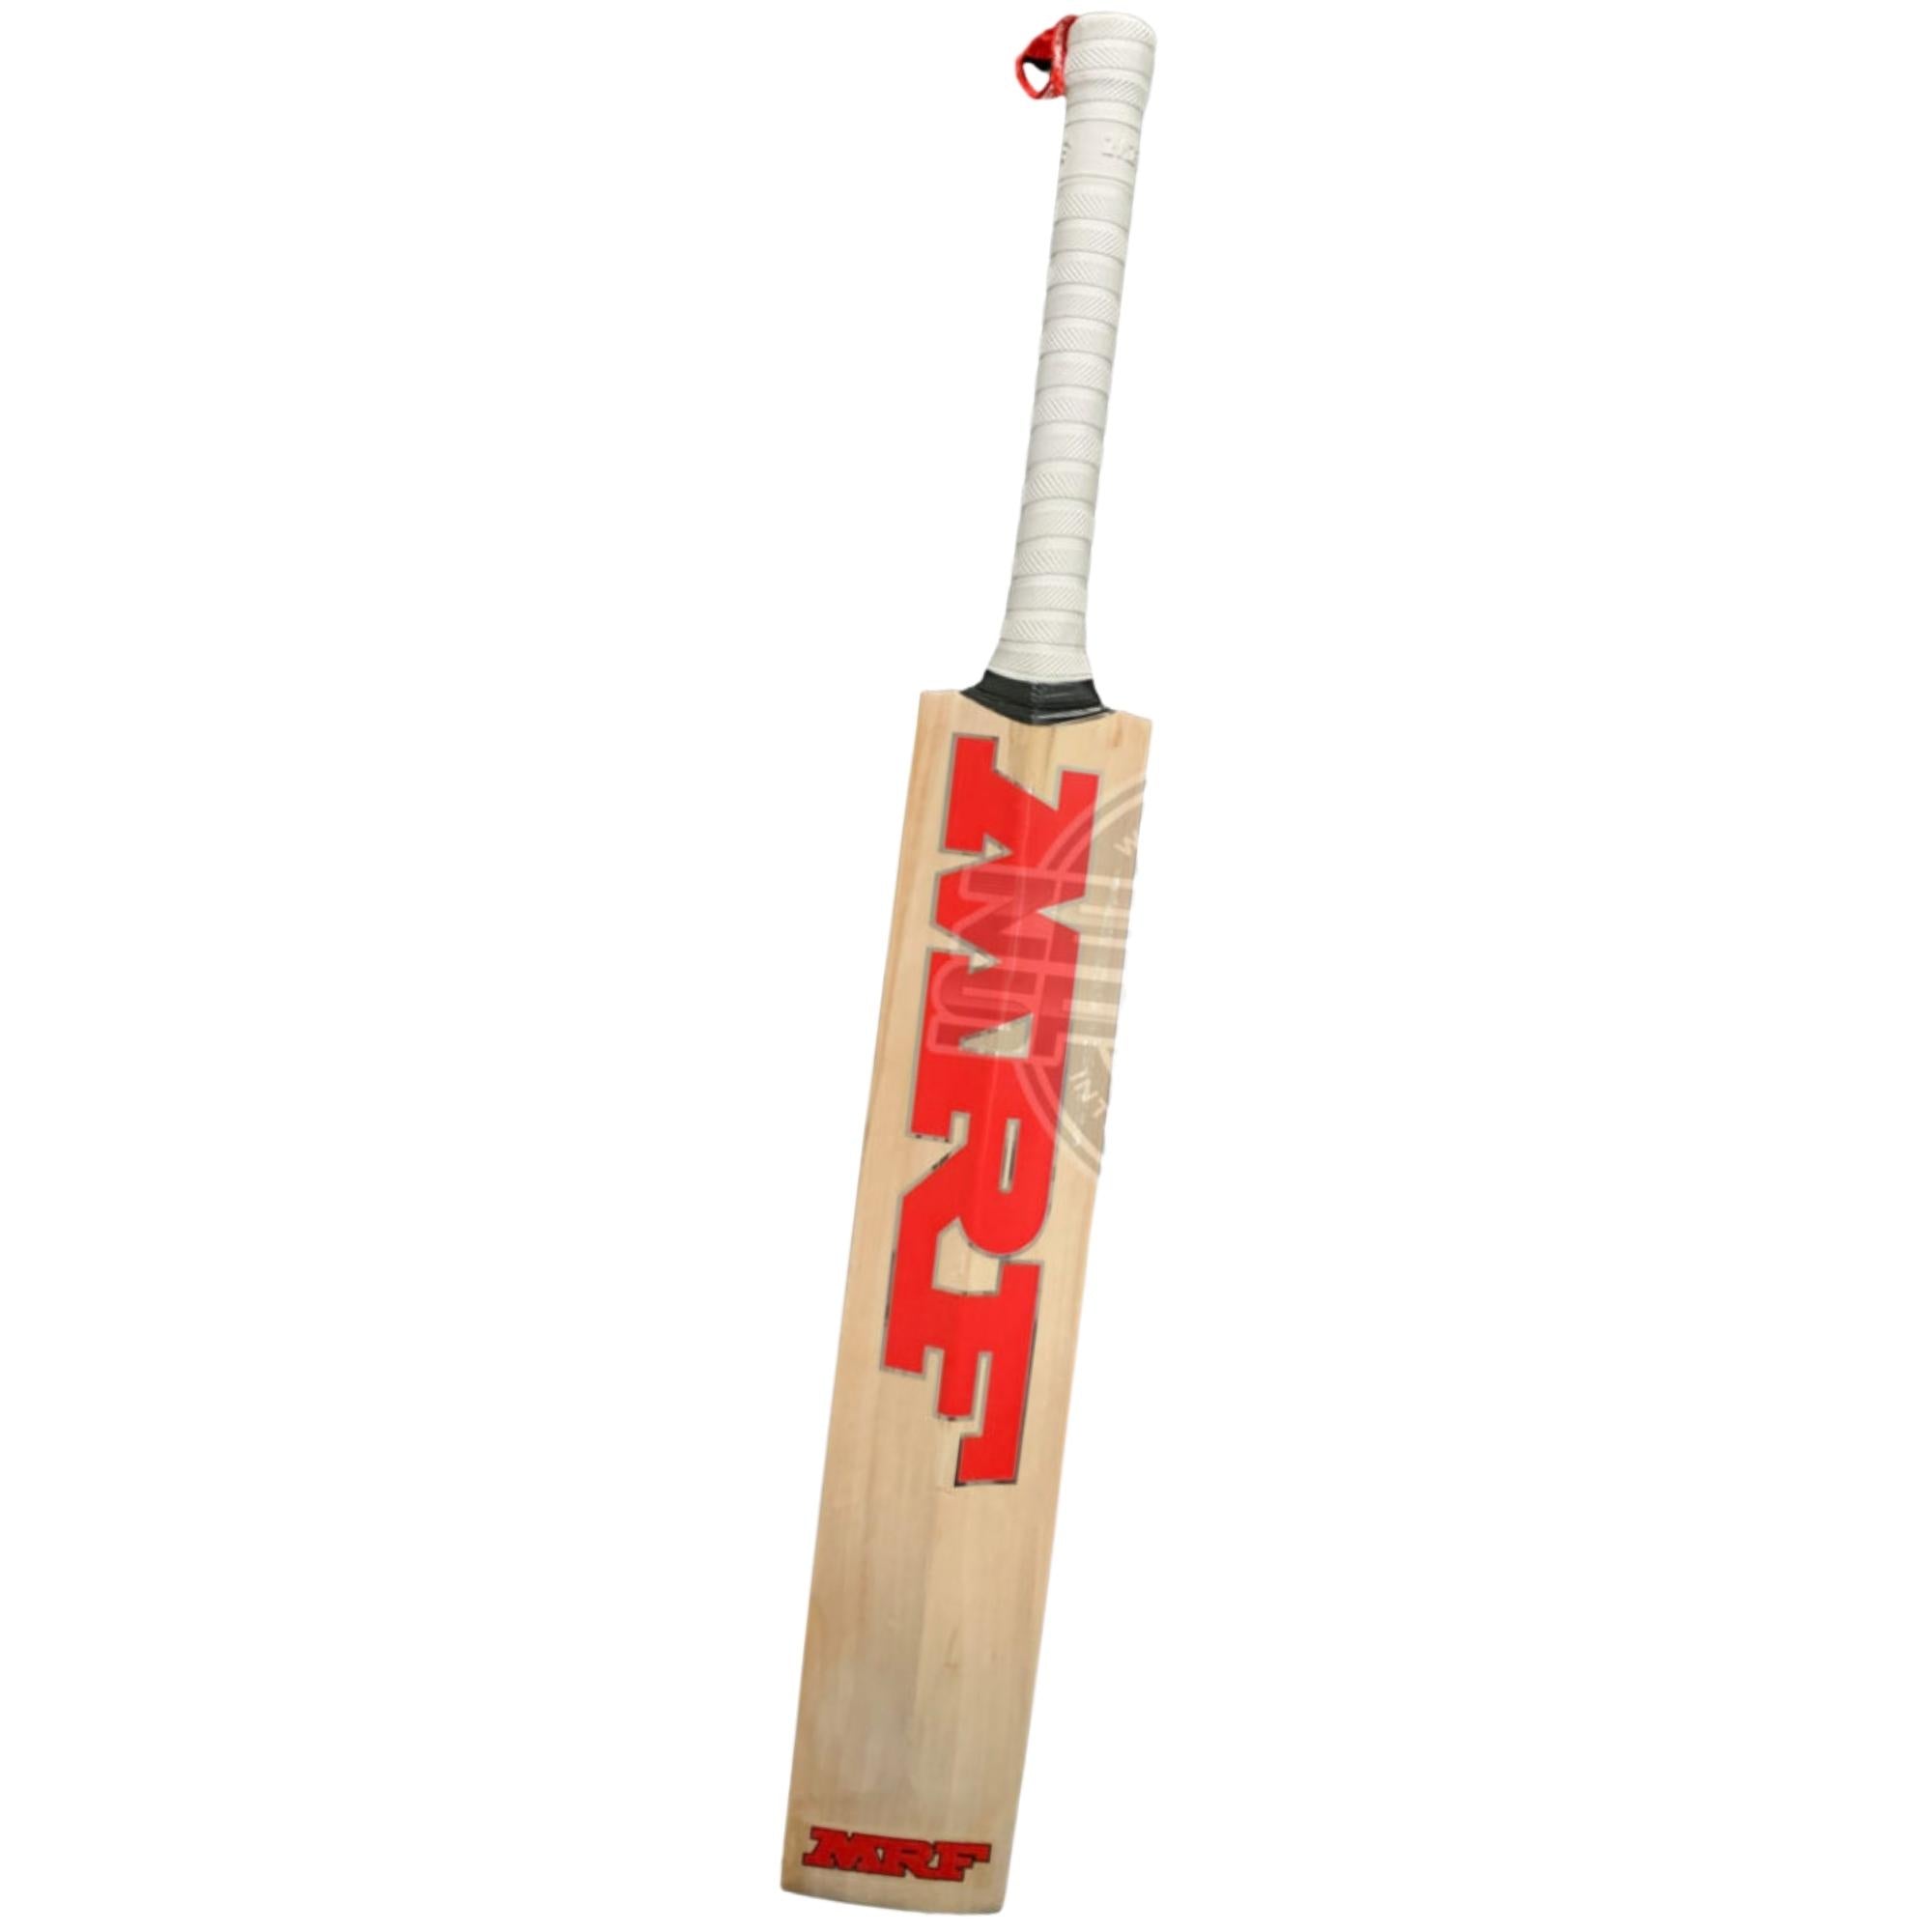 MRF Legend VK18 2.0 Virat Kohli Edition Cricket Bat